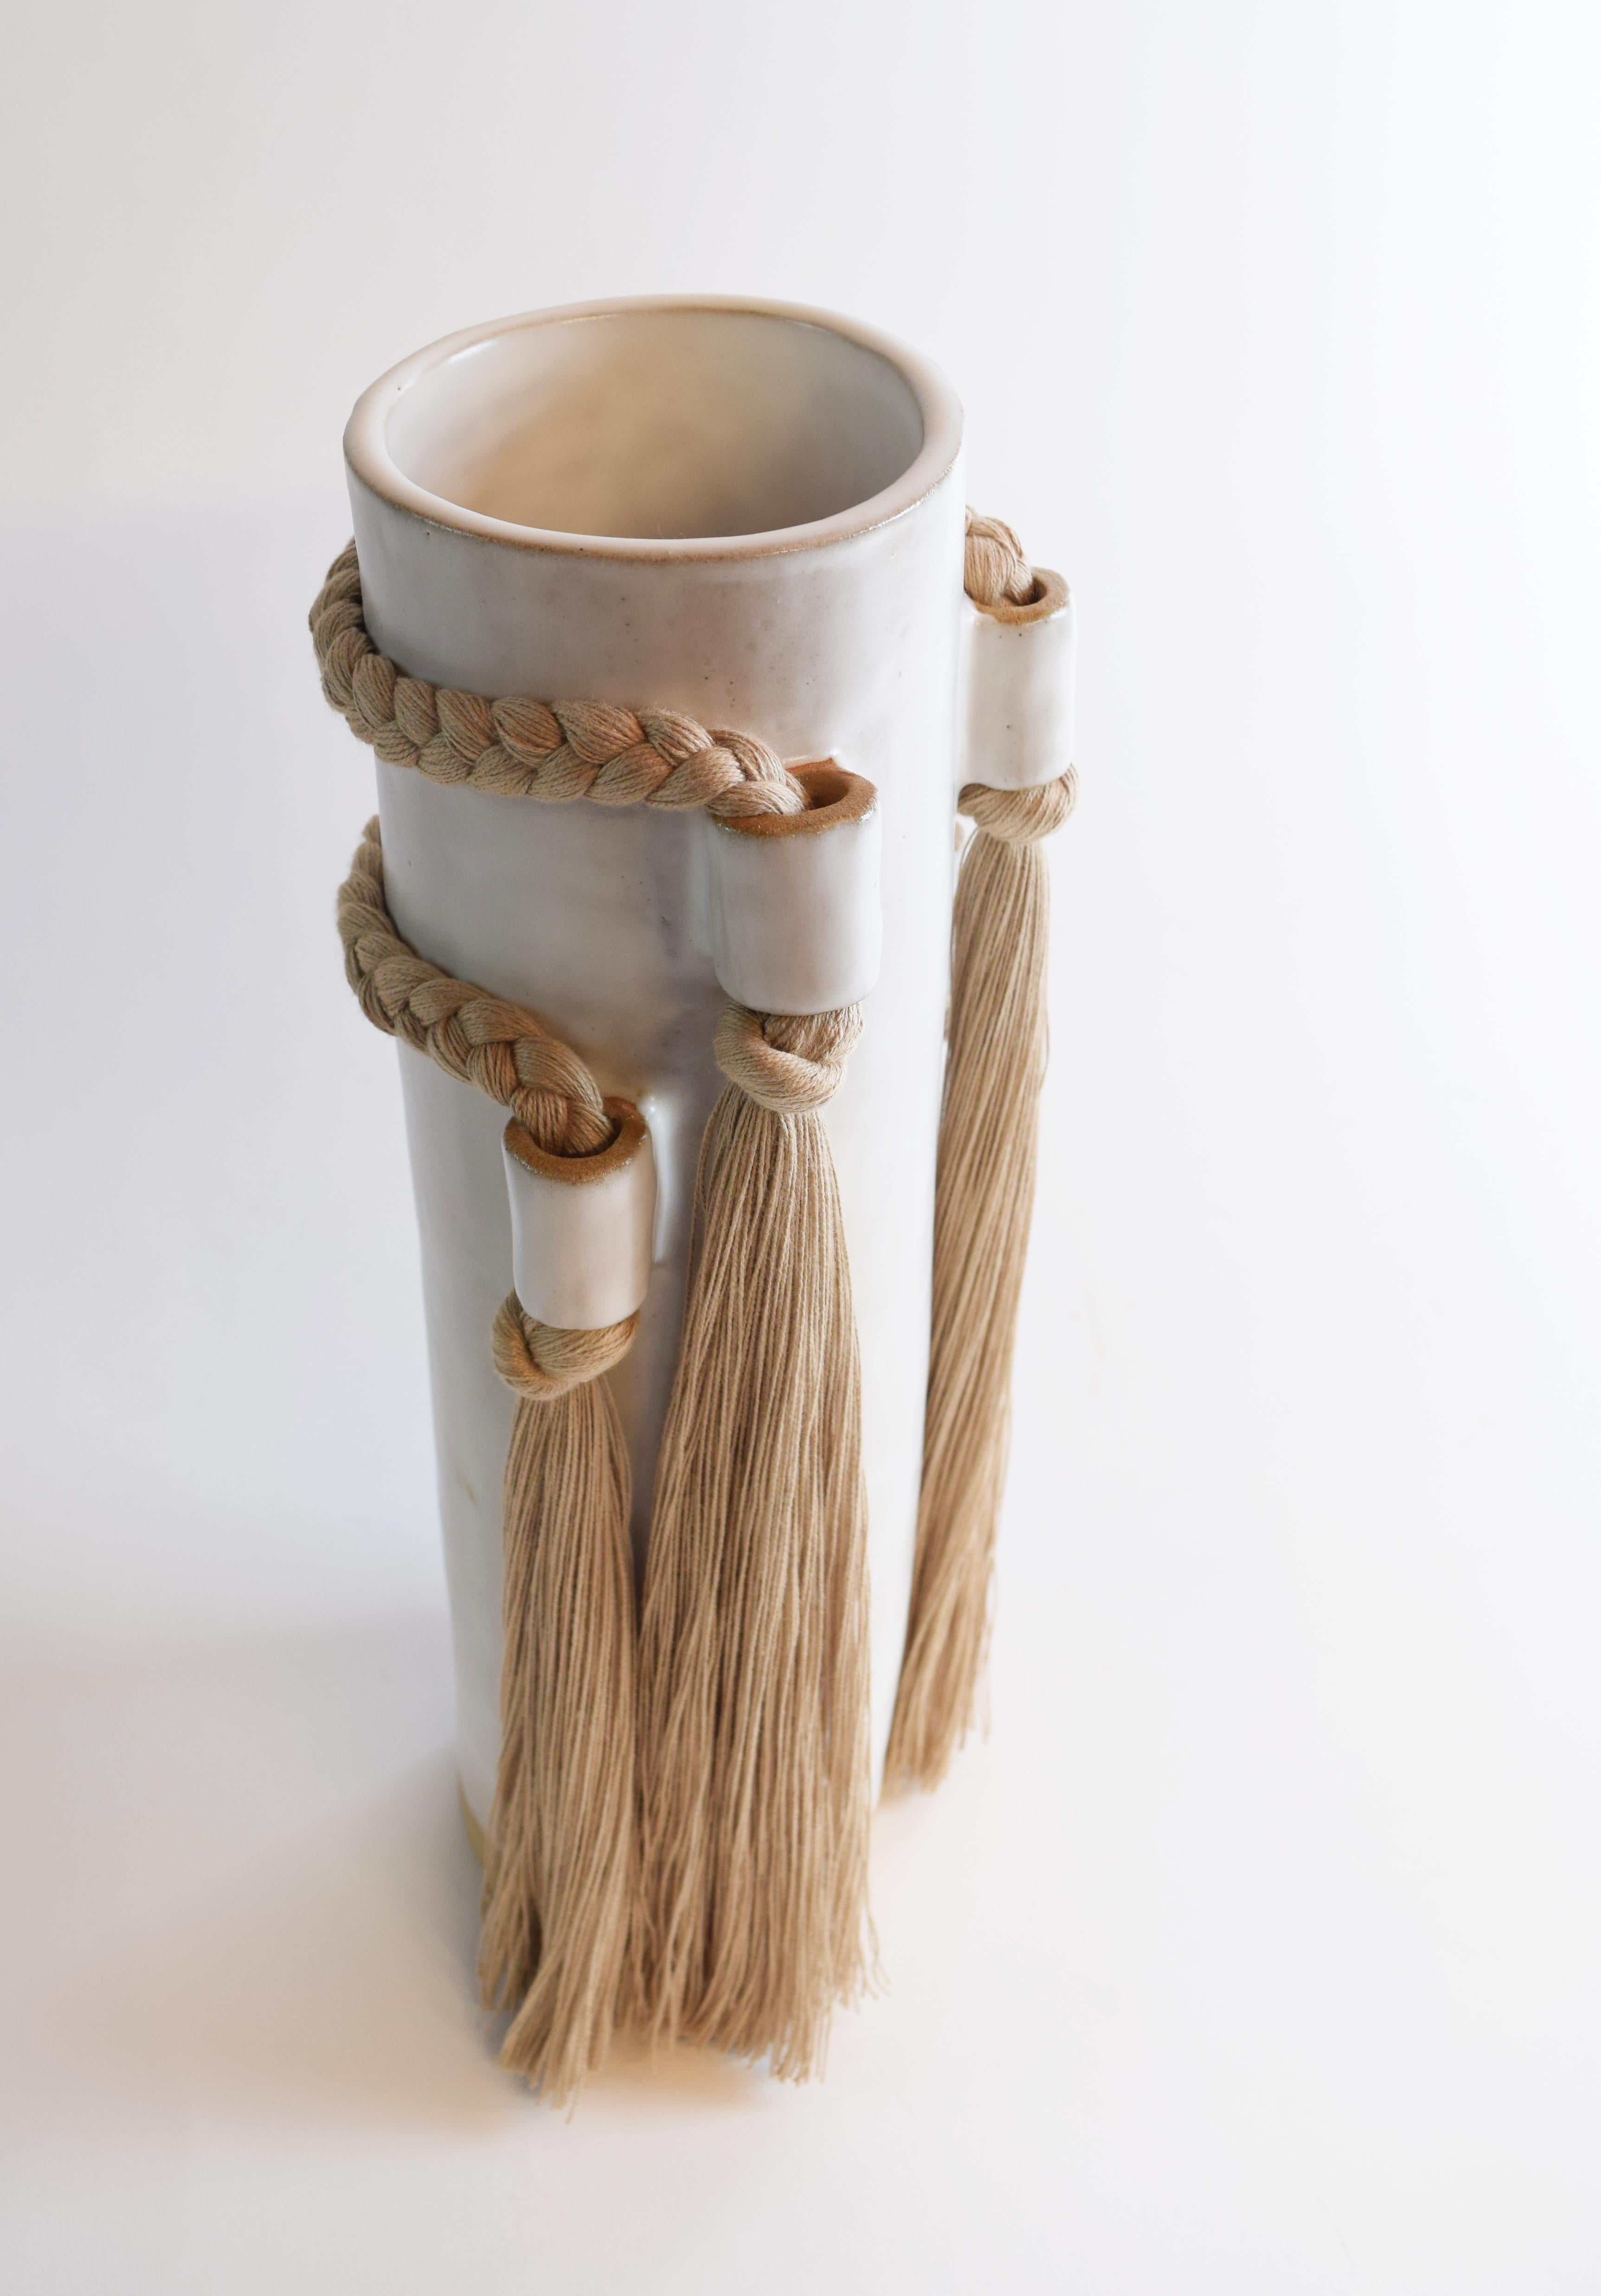 Organic Modern Handmade Ceramic Vase #735 in White with Tan Cotton Braided & Fringe Details For Sale